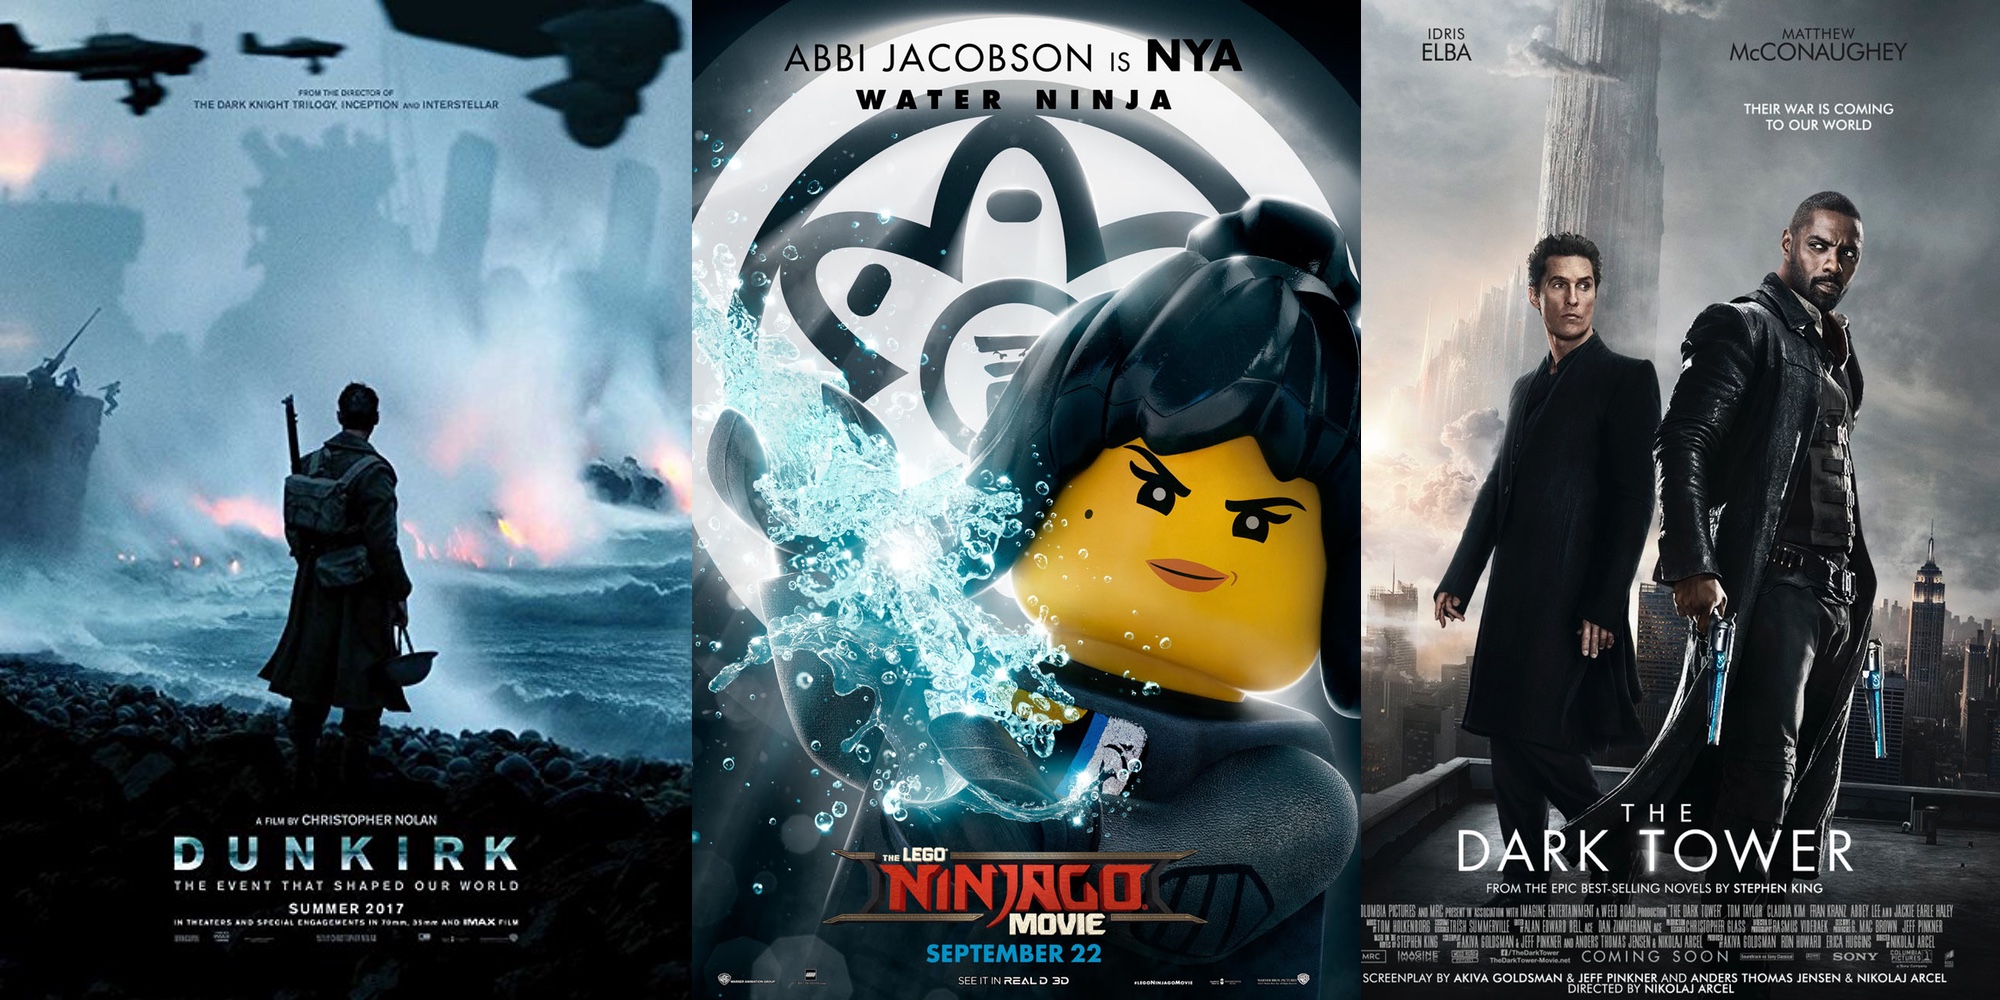 Prime members get $3 movie rentals Dunkirk, LEGO Ninjago, Dark Tower, more